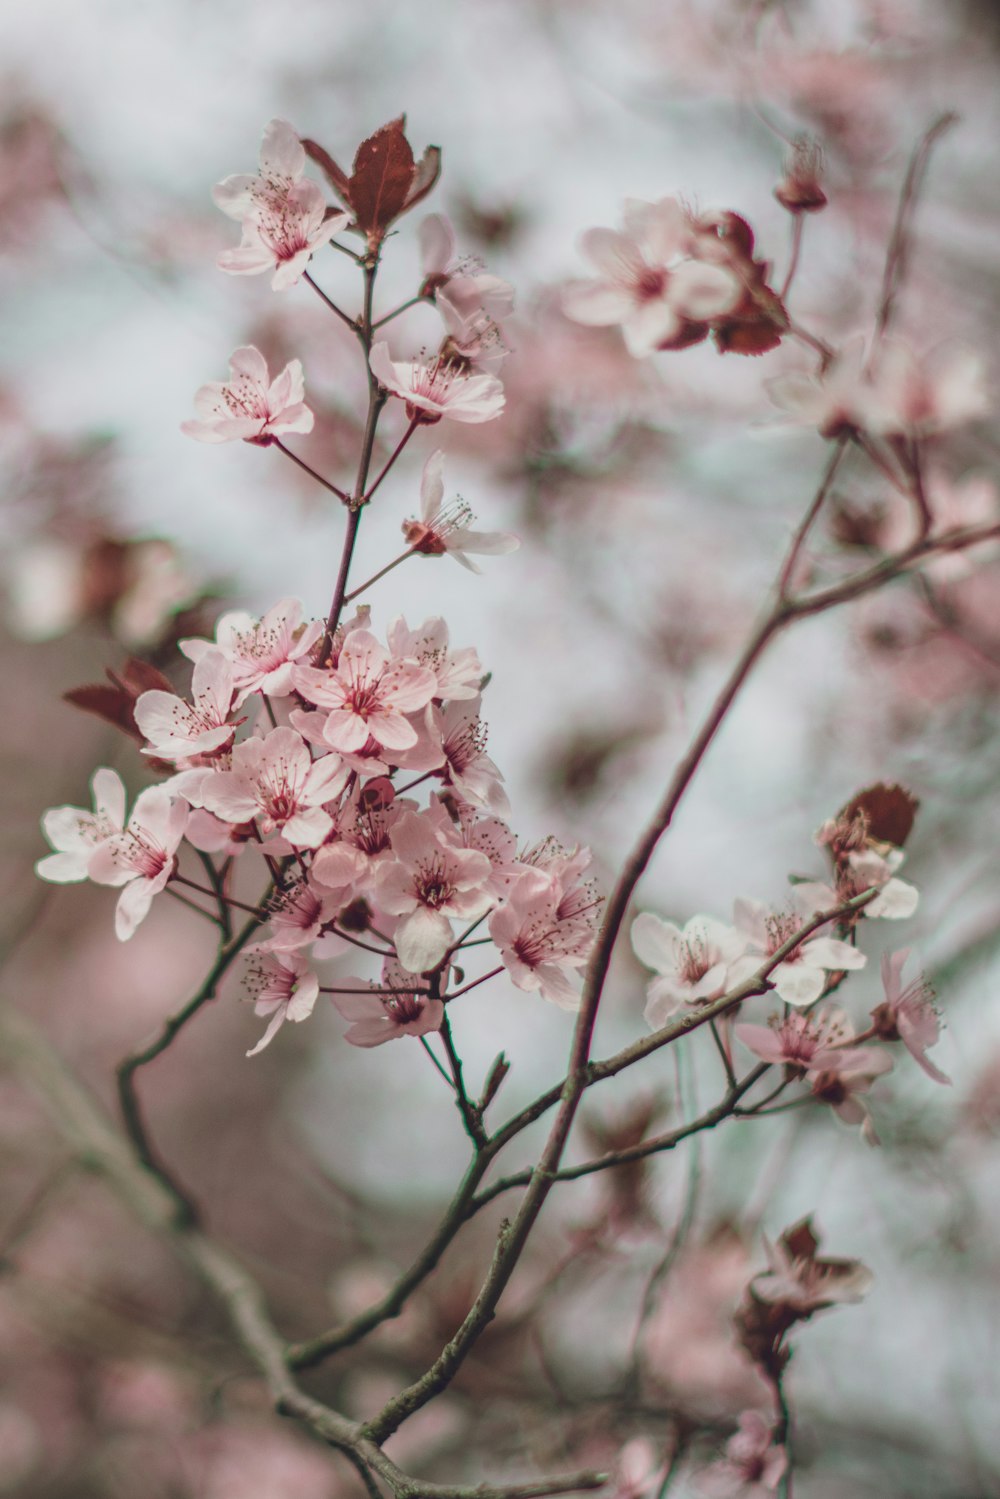 pink cherry blossom in close up photography photo – Free Deutschland Image  on Unsplash